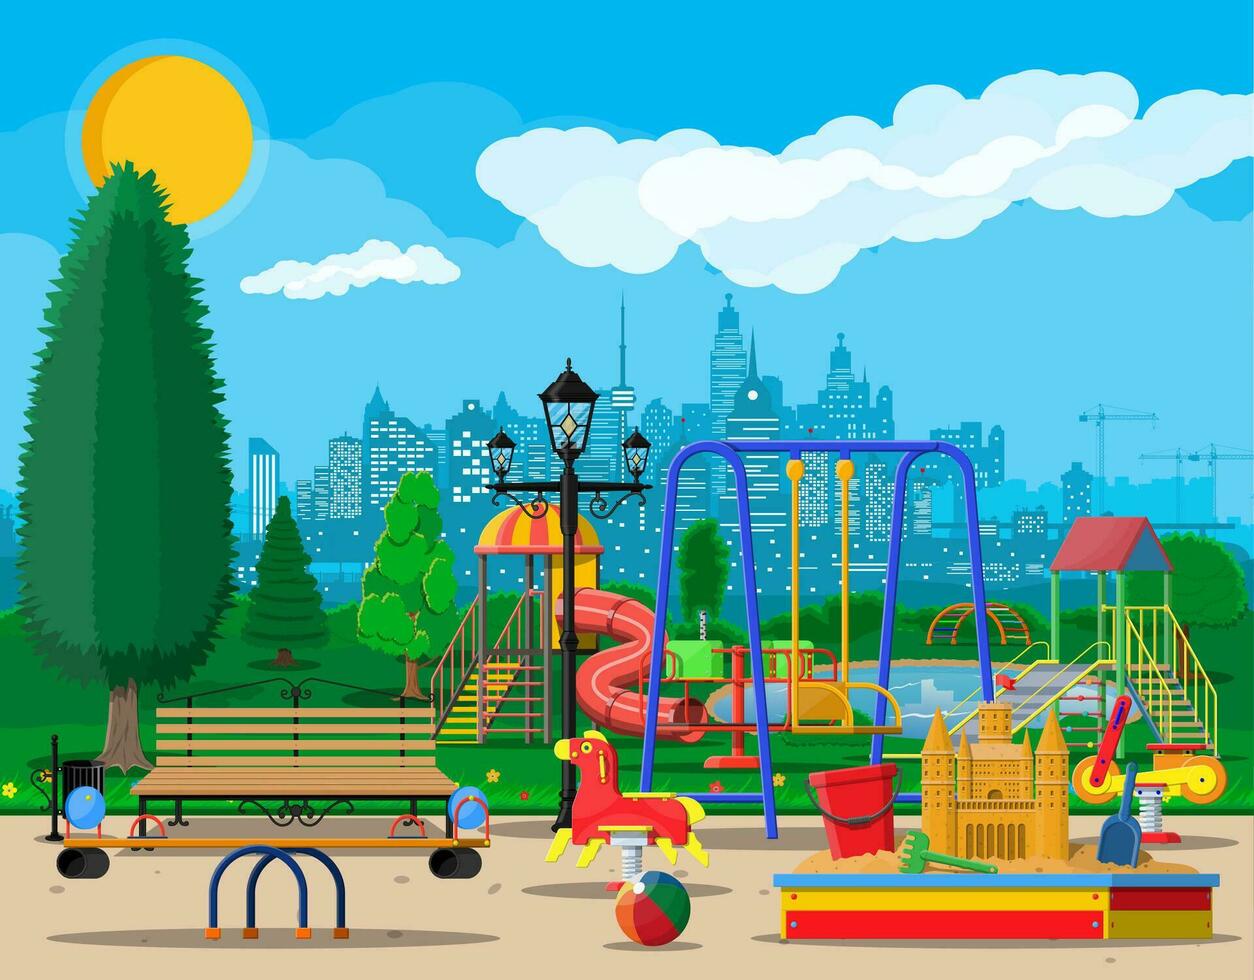 Kids playground kindergarten panorama. Urban child amusement. Slide ladder, rocking toy on spring, slide tube, swing carousel balancer, sandbox. City park. Cityscape. Vector illustration flat style